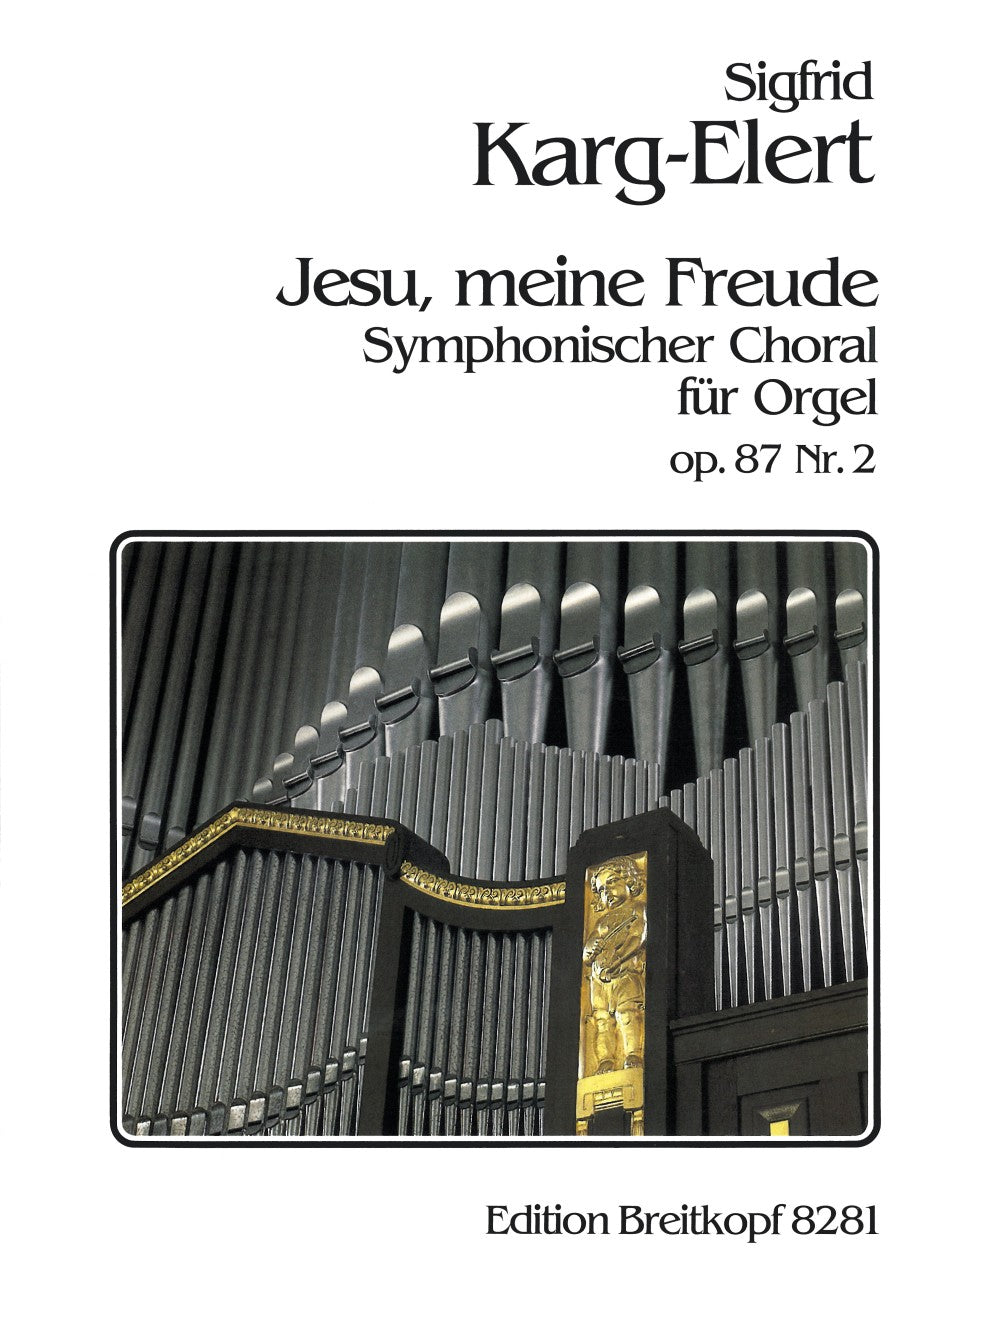 Karg-Elert: Jesu meine Freude, Op. 87, No. 2